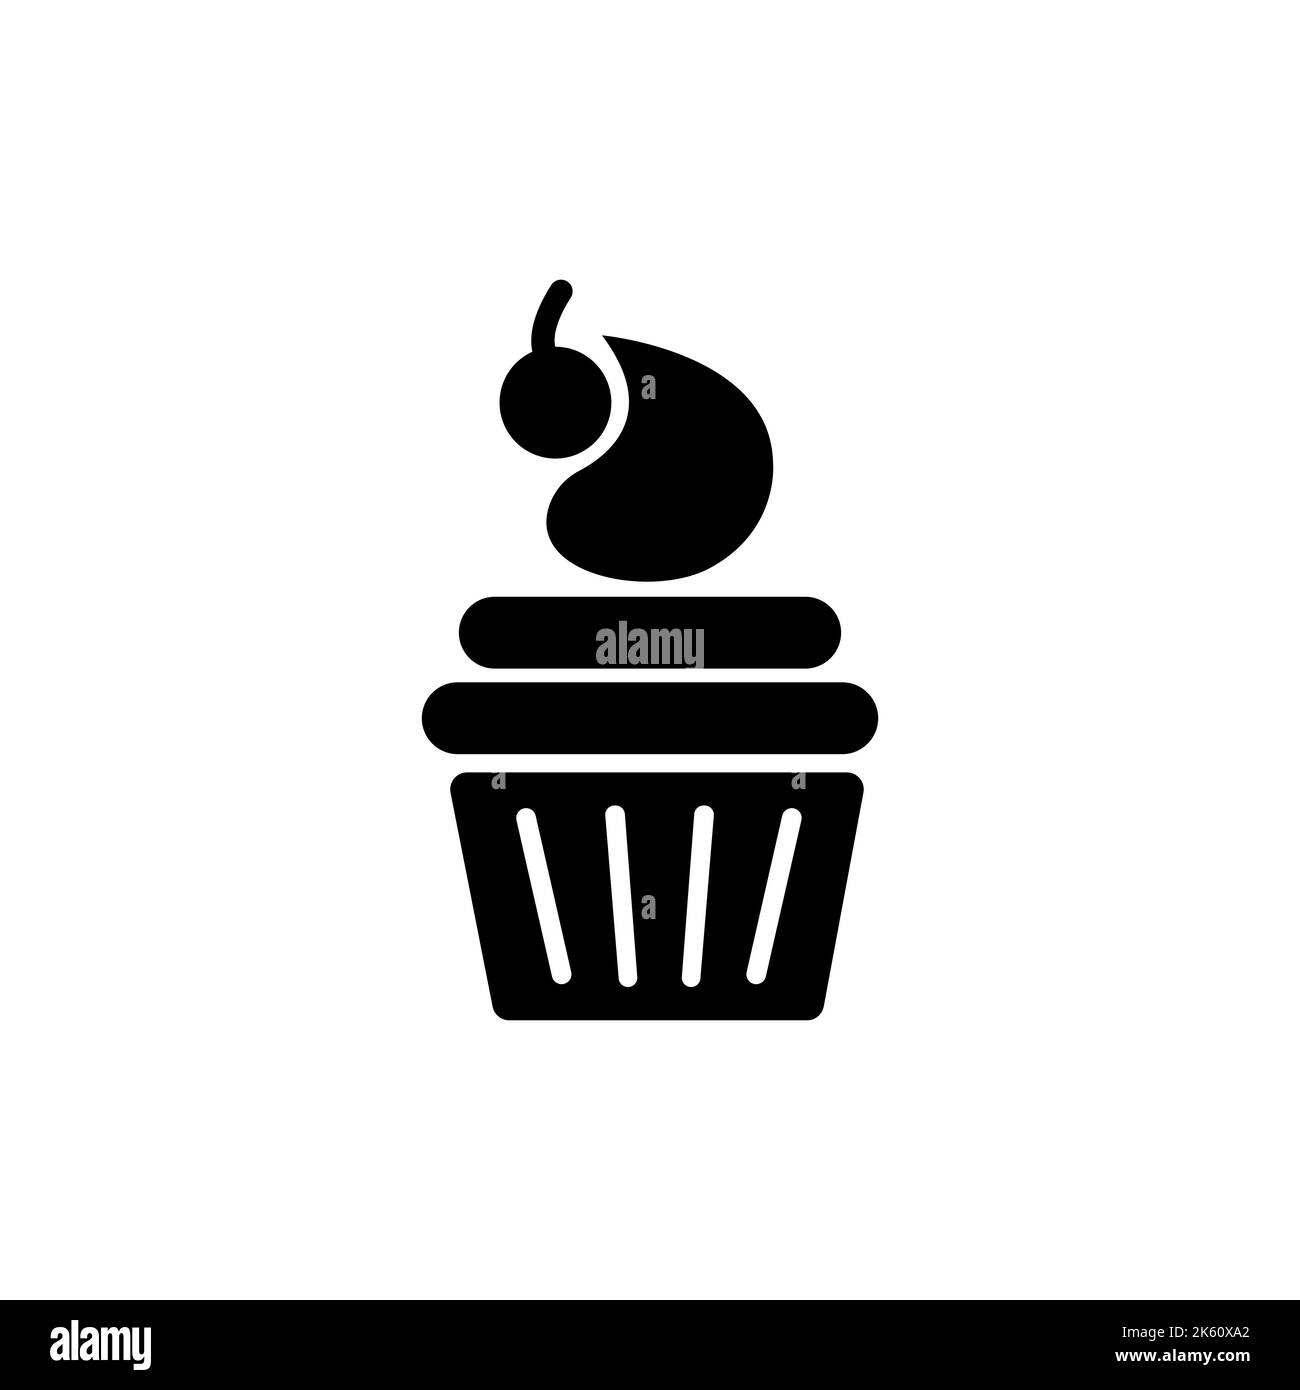 Cake icon. Bakery icon. Simple flat black glyph Stock Vector